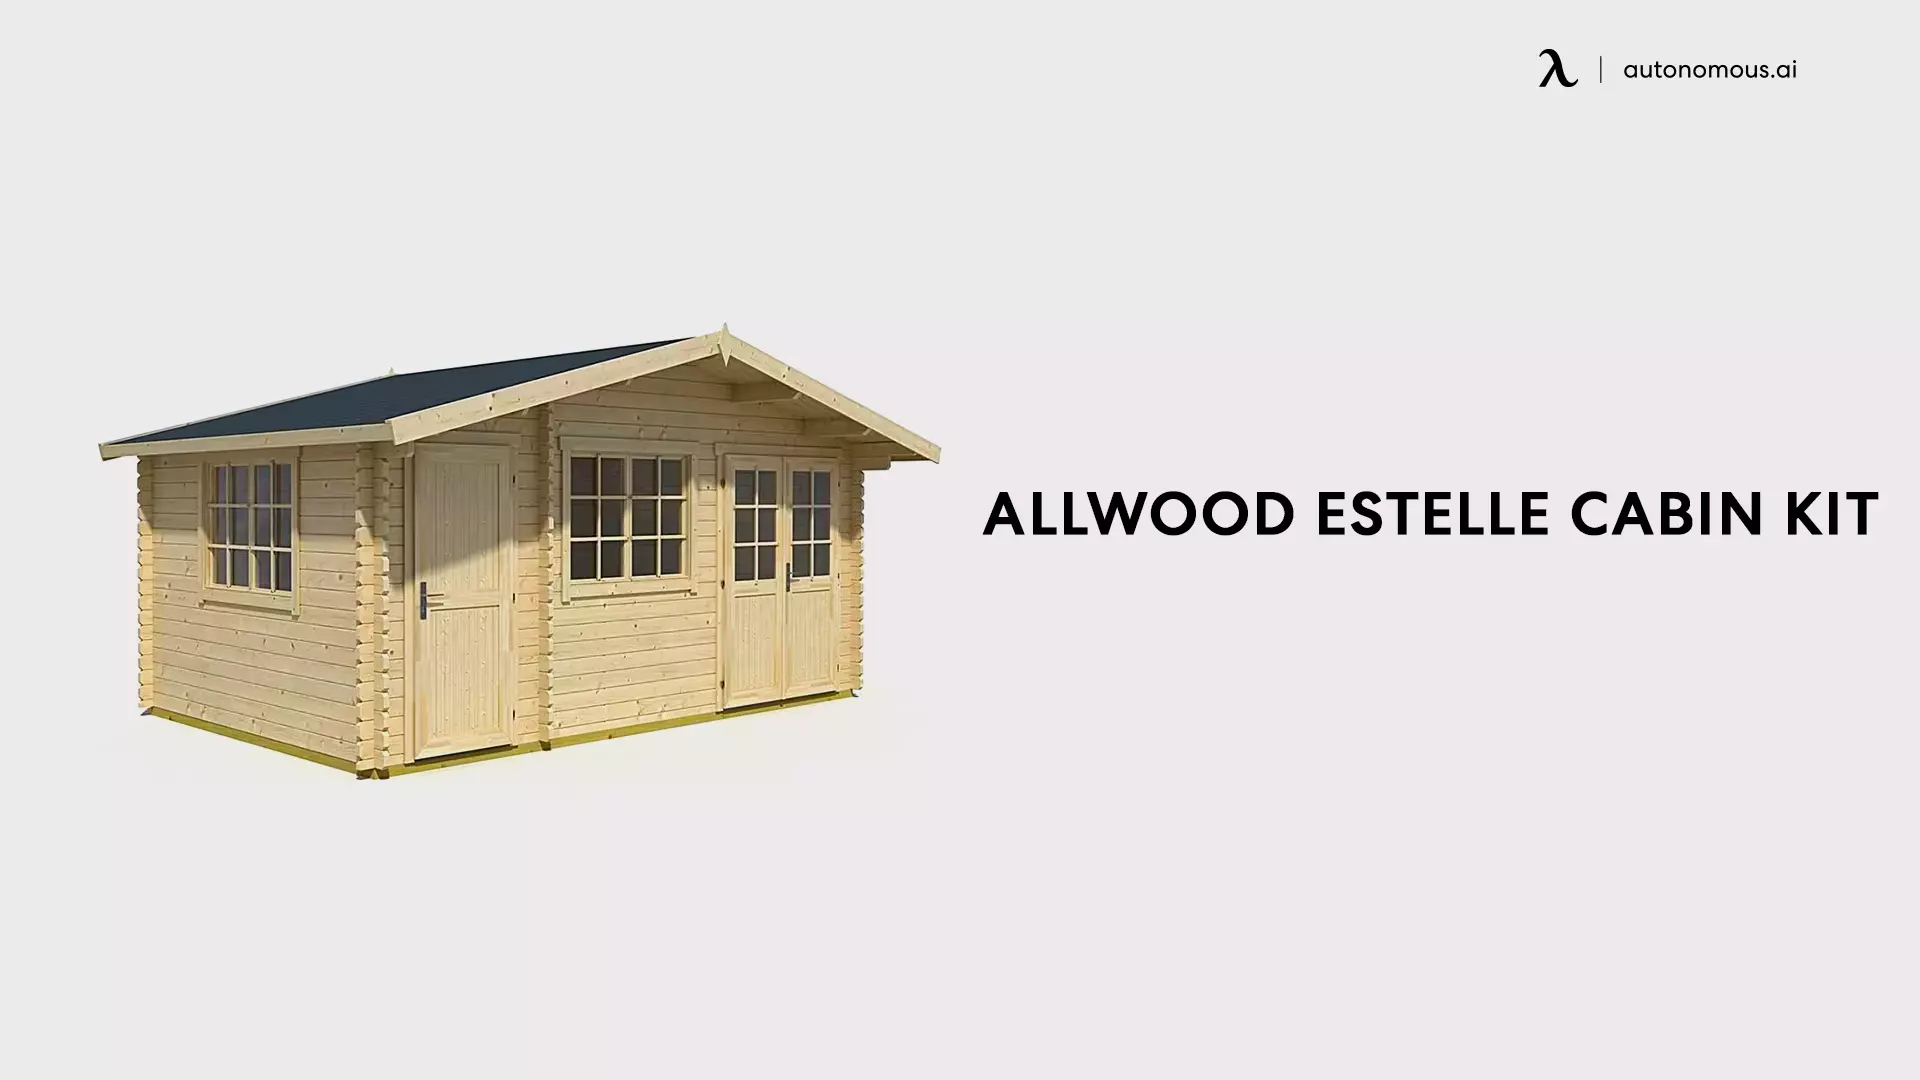 Allwood Estelle Cabin Kit - modern accessory dwelling unit